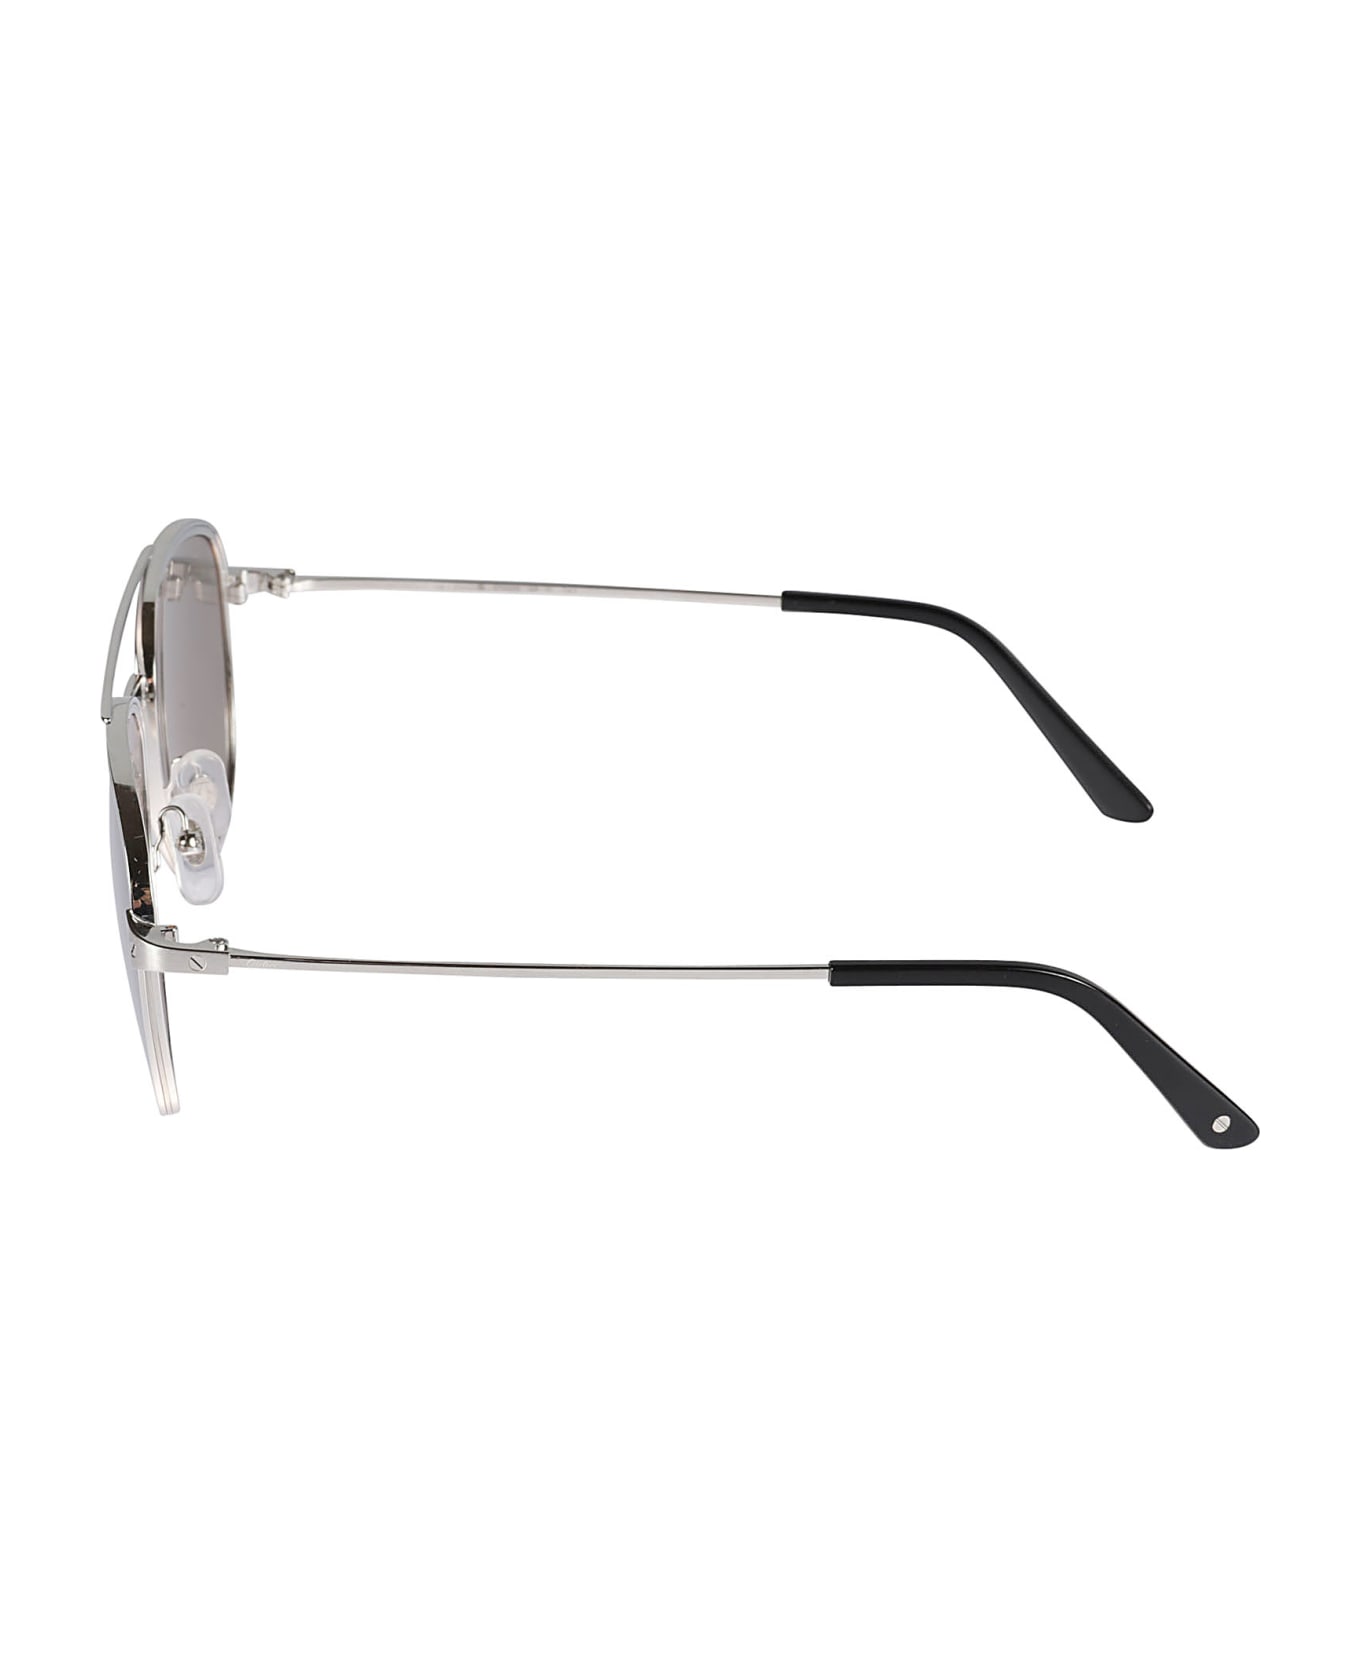 Cartier Eyewear Genuine Sunglasses - 006 silver silver silver